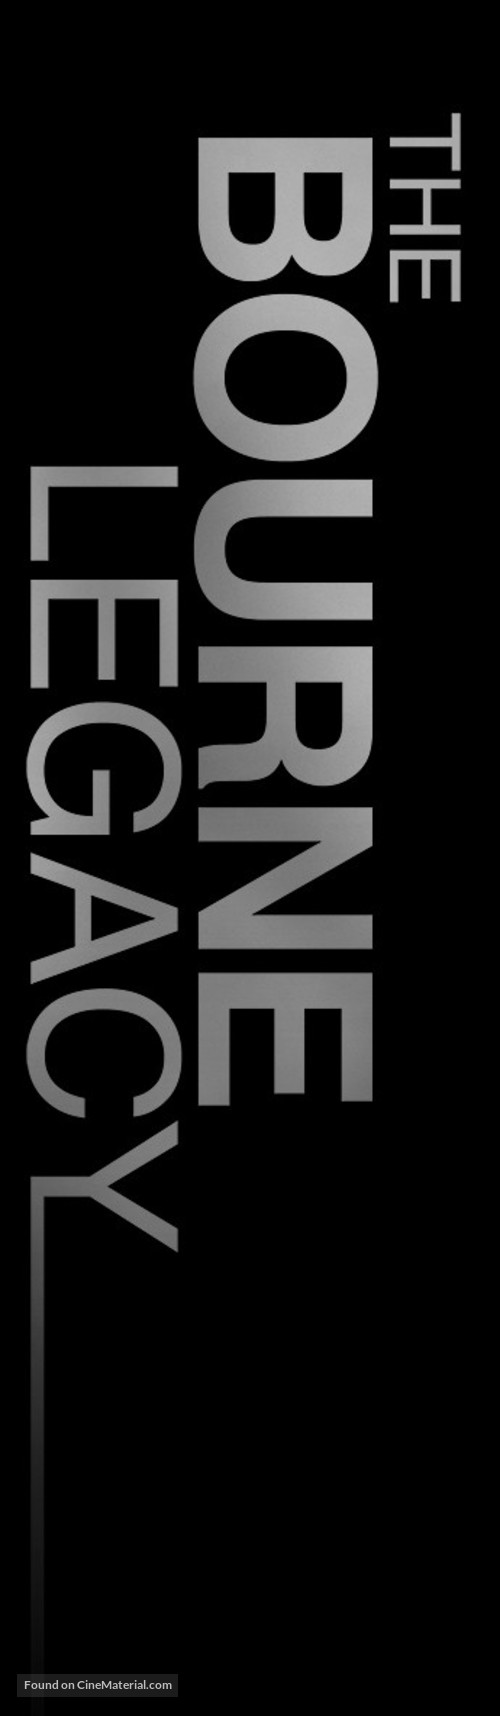 The Bourne Legacy - Logo